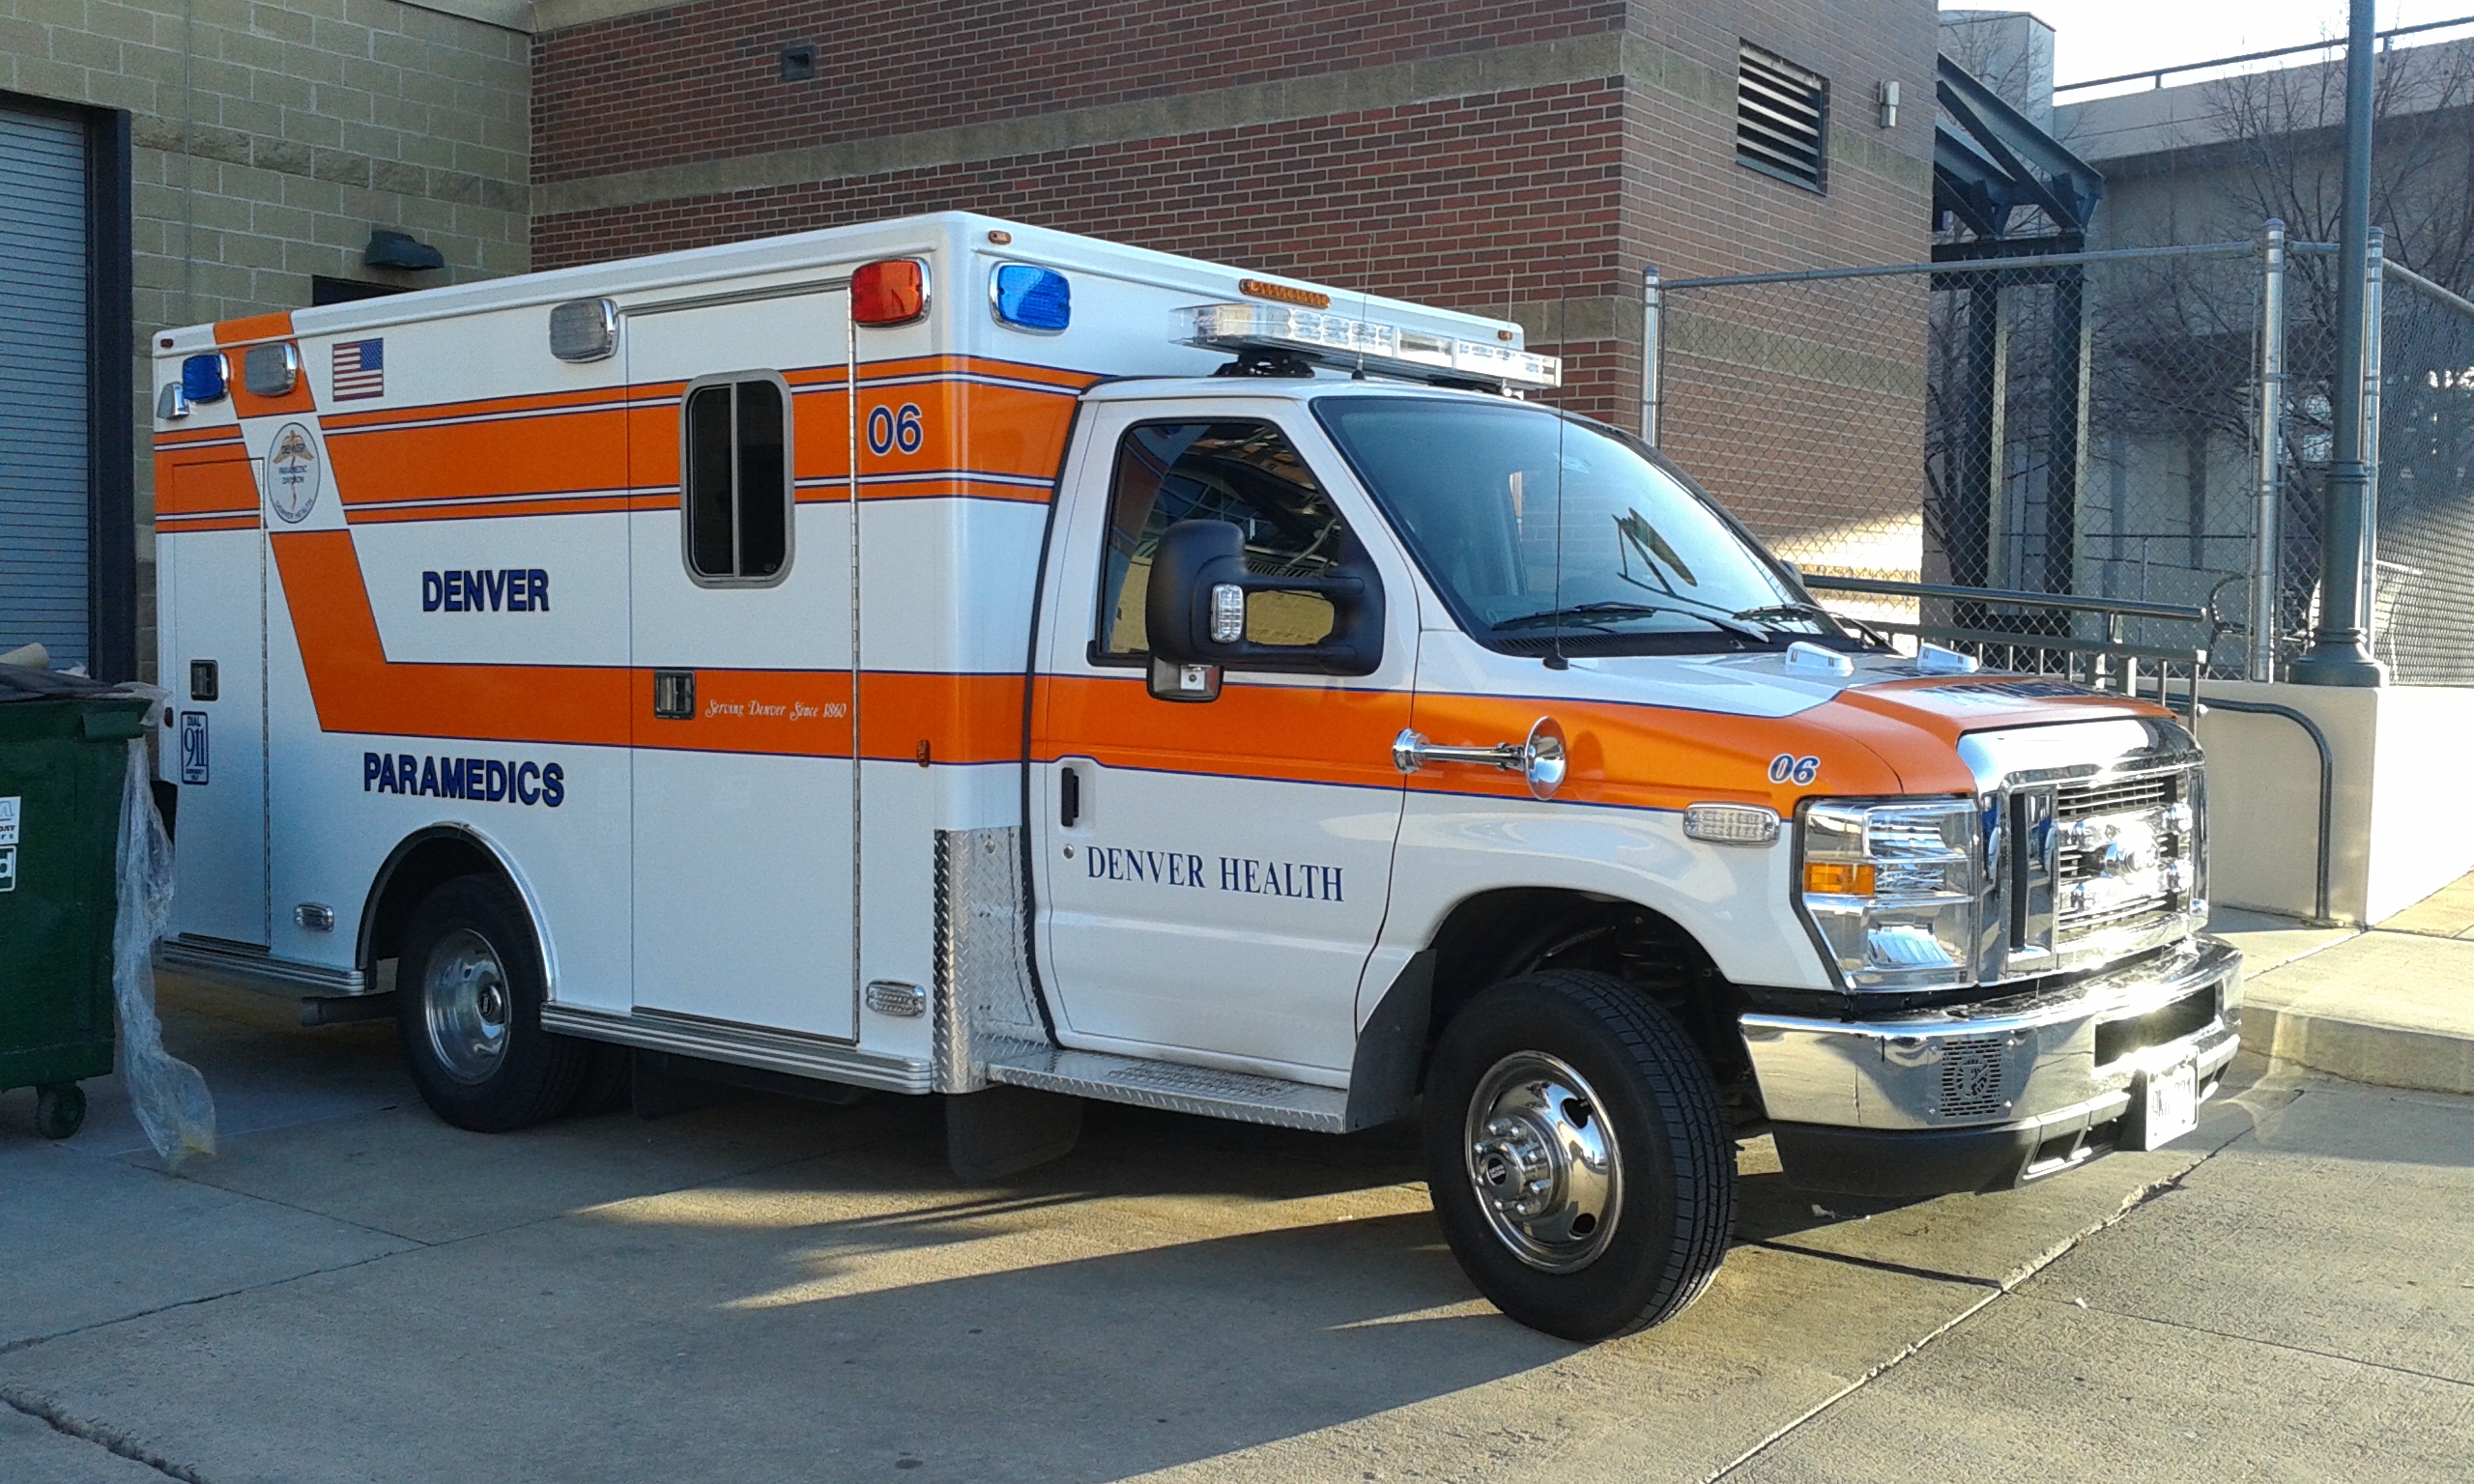 Denver_Health_Paramedics_ambulance